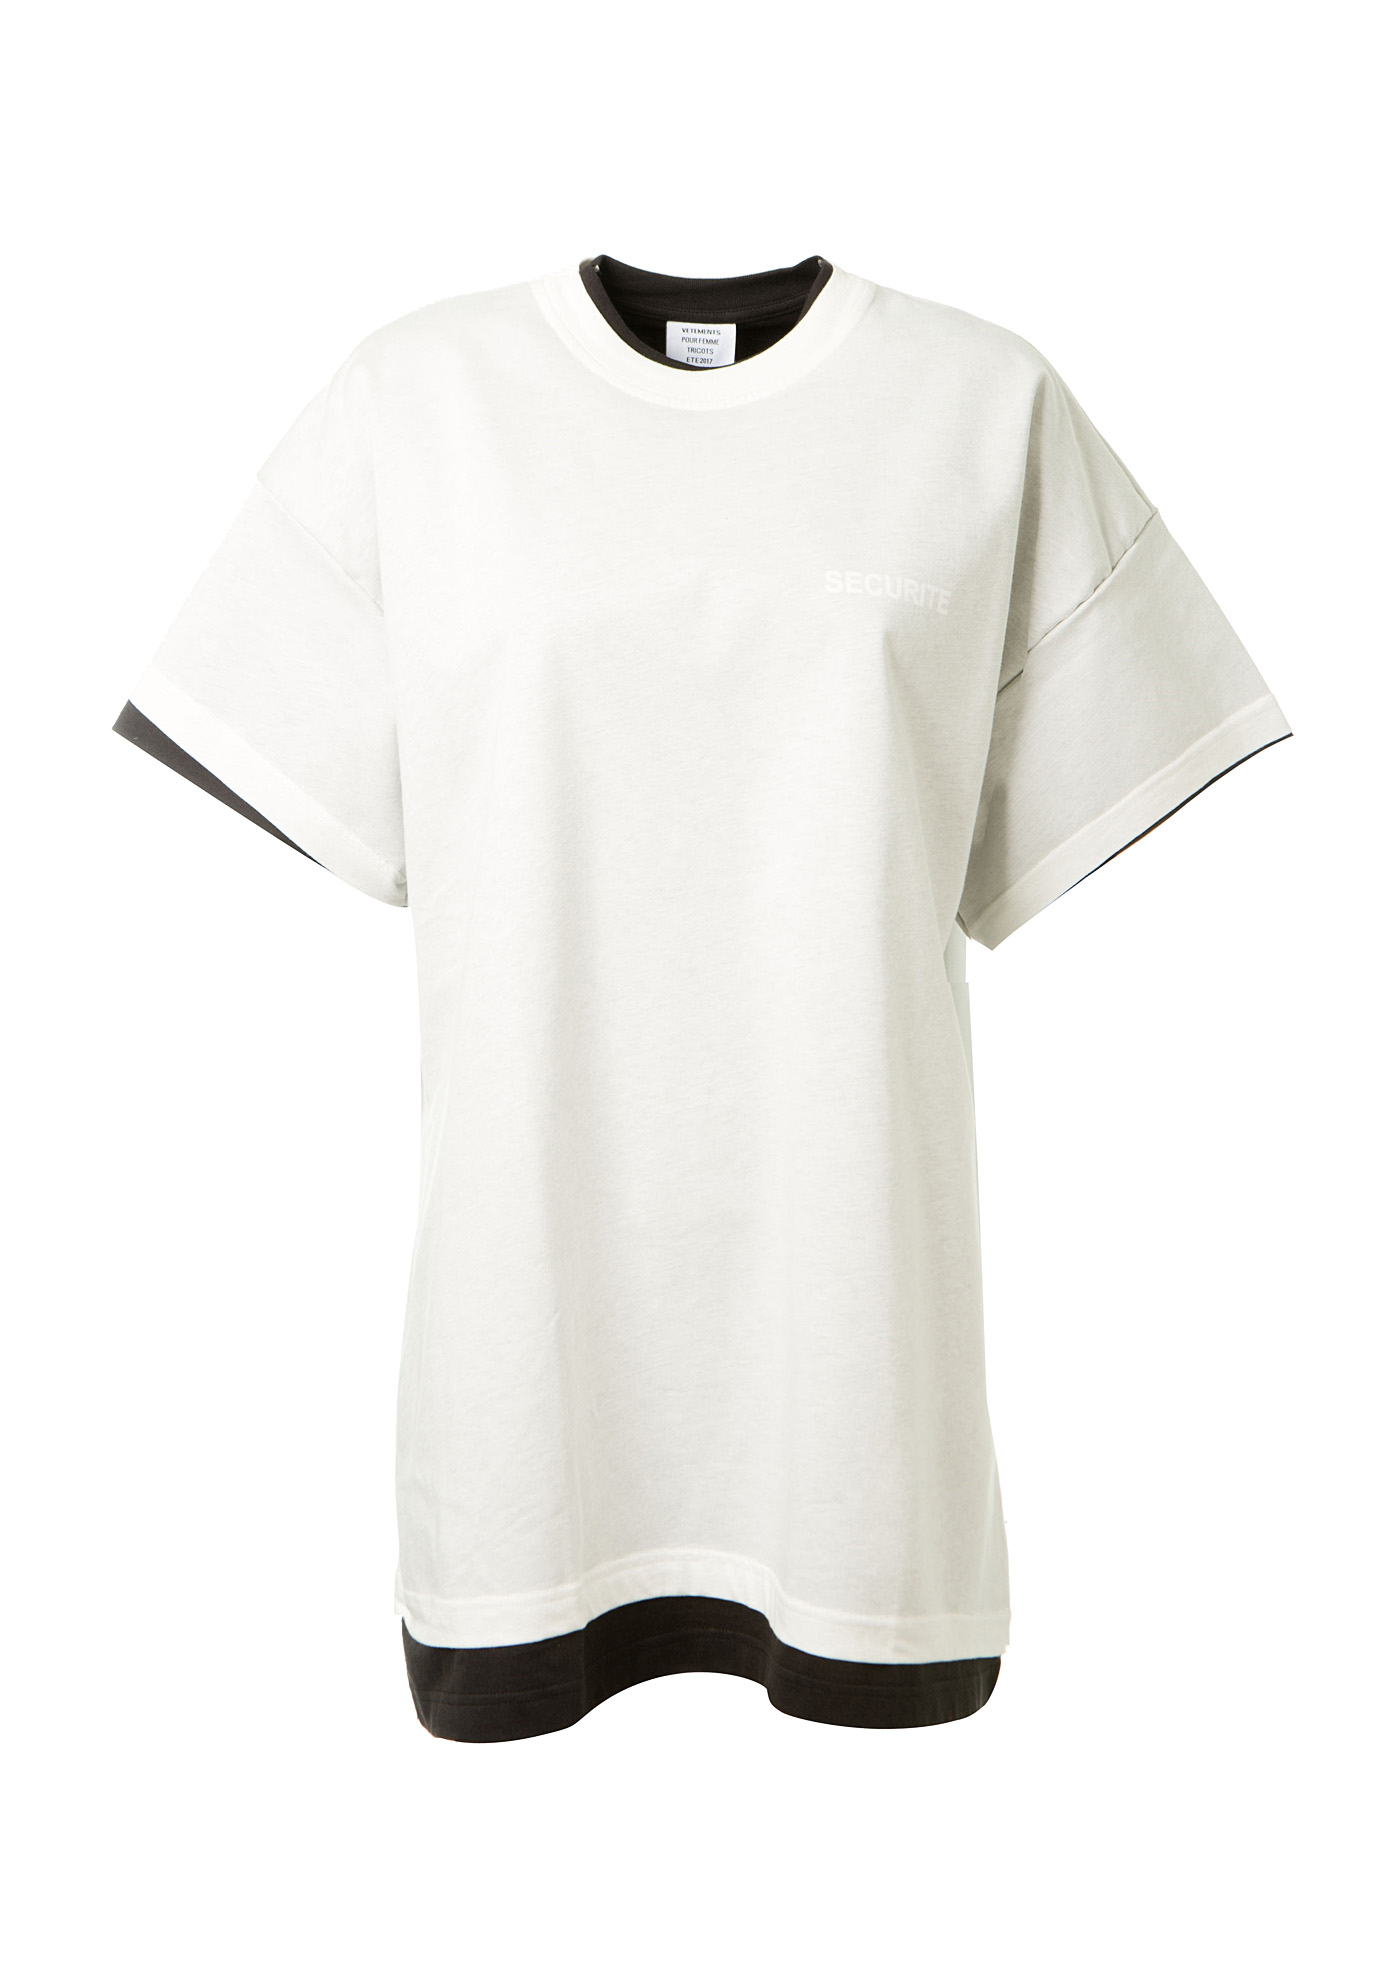 Vetements X Hanes Double-layered White Cotton T-shirt | ModeSens